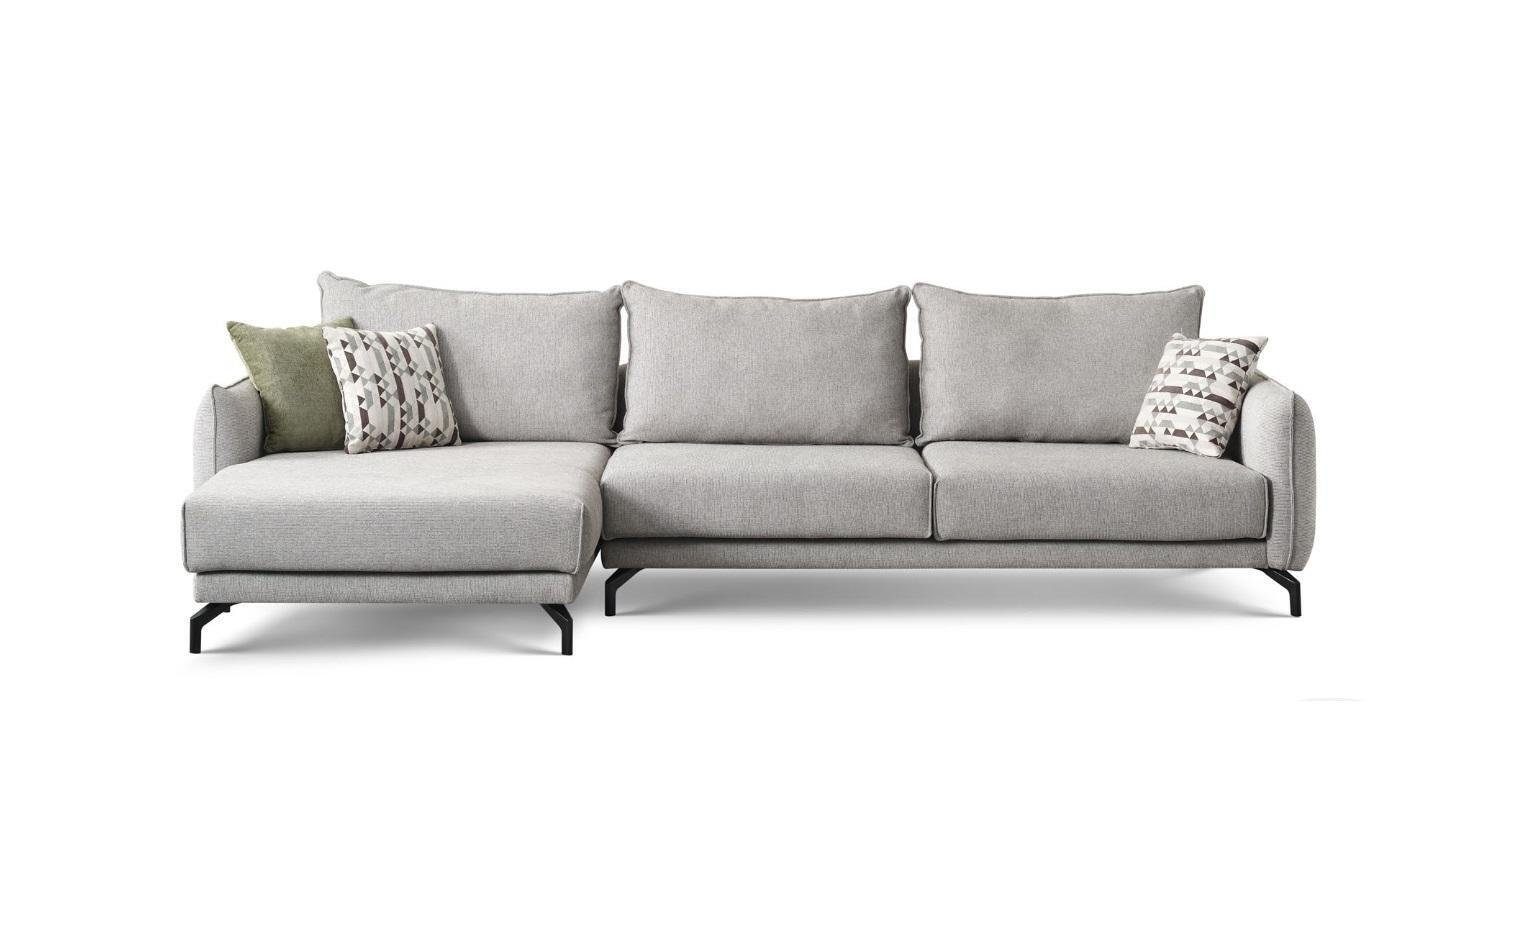 JVmoebel Ecksofa Couch L Form Ecksofa Grau Teile, Made Große Sofa Europa Modern, in 2 Wohnlandschaft